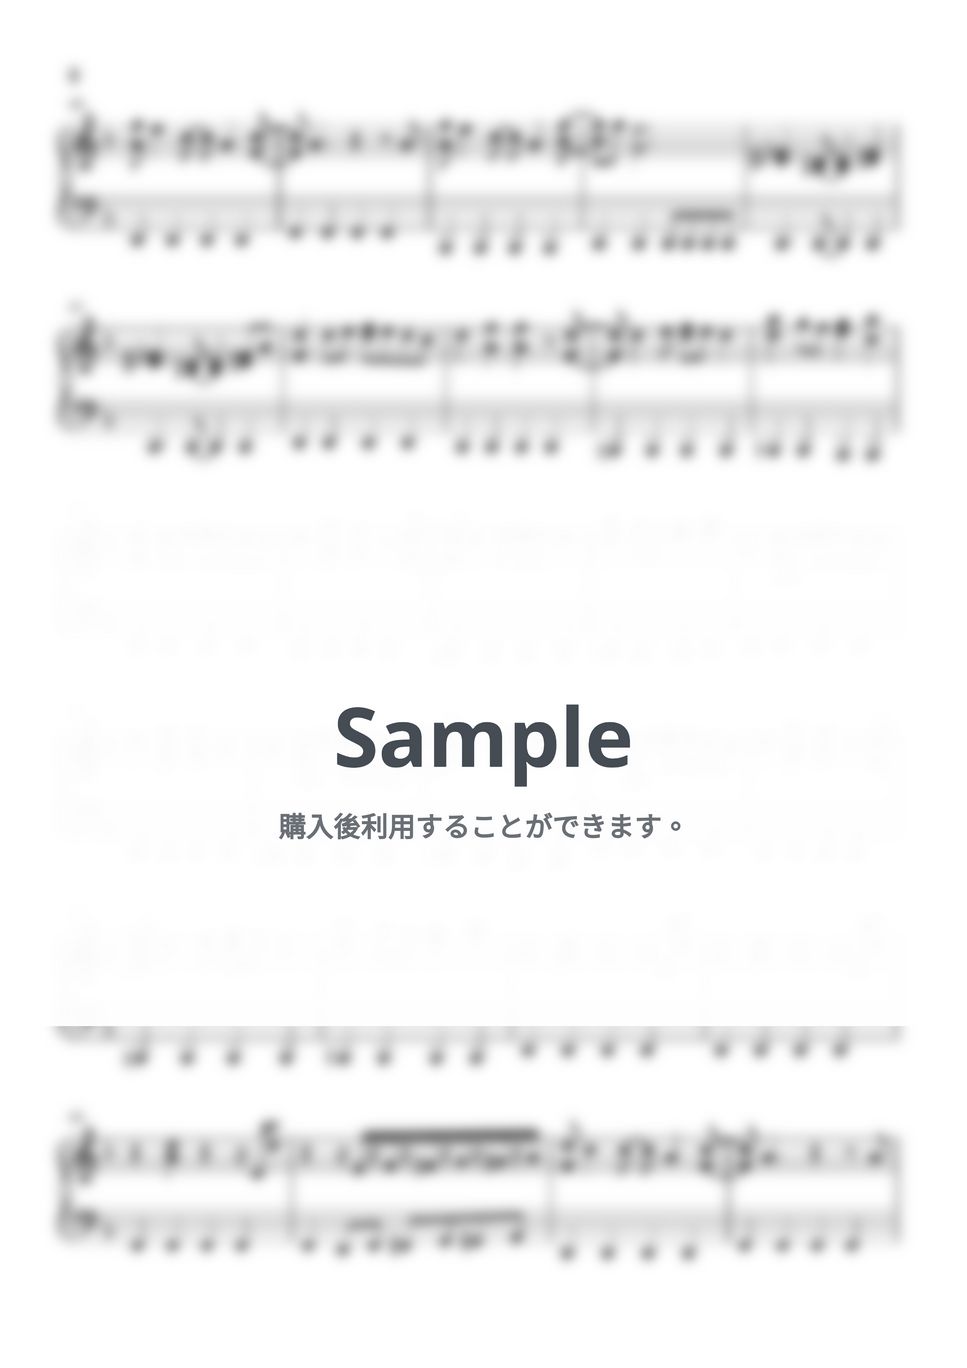 10-FEET - 第ゼロ感 (スラムダンク(SLAM DUNK) / ピアノ楽譜 / 初級) by Piano Lovers.jp